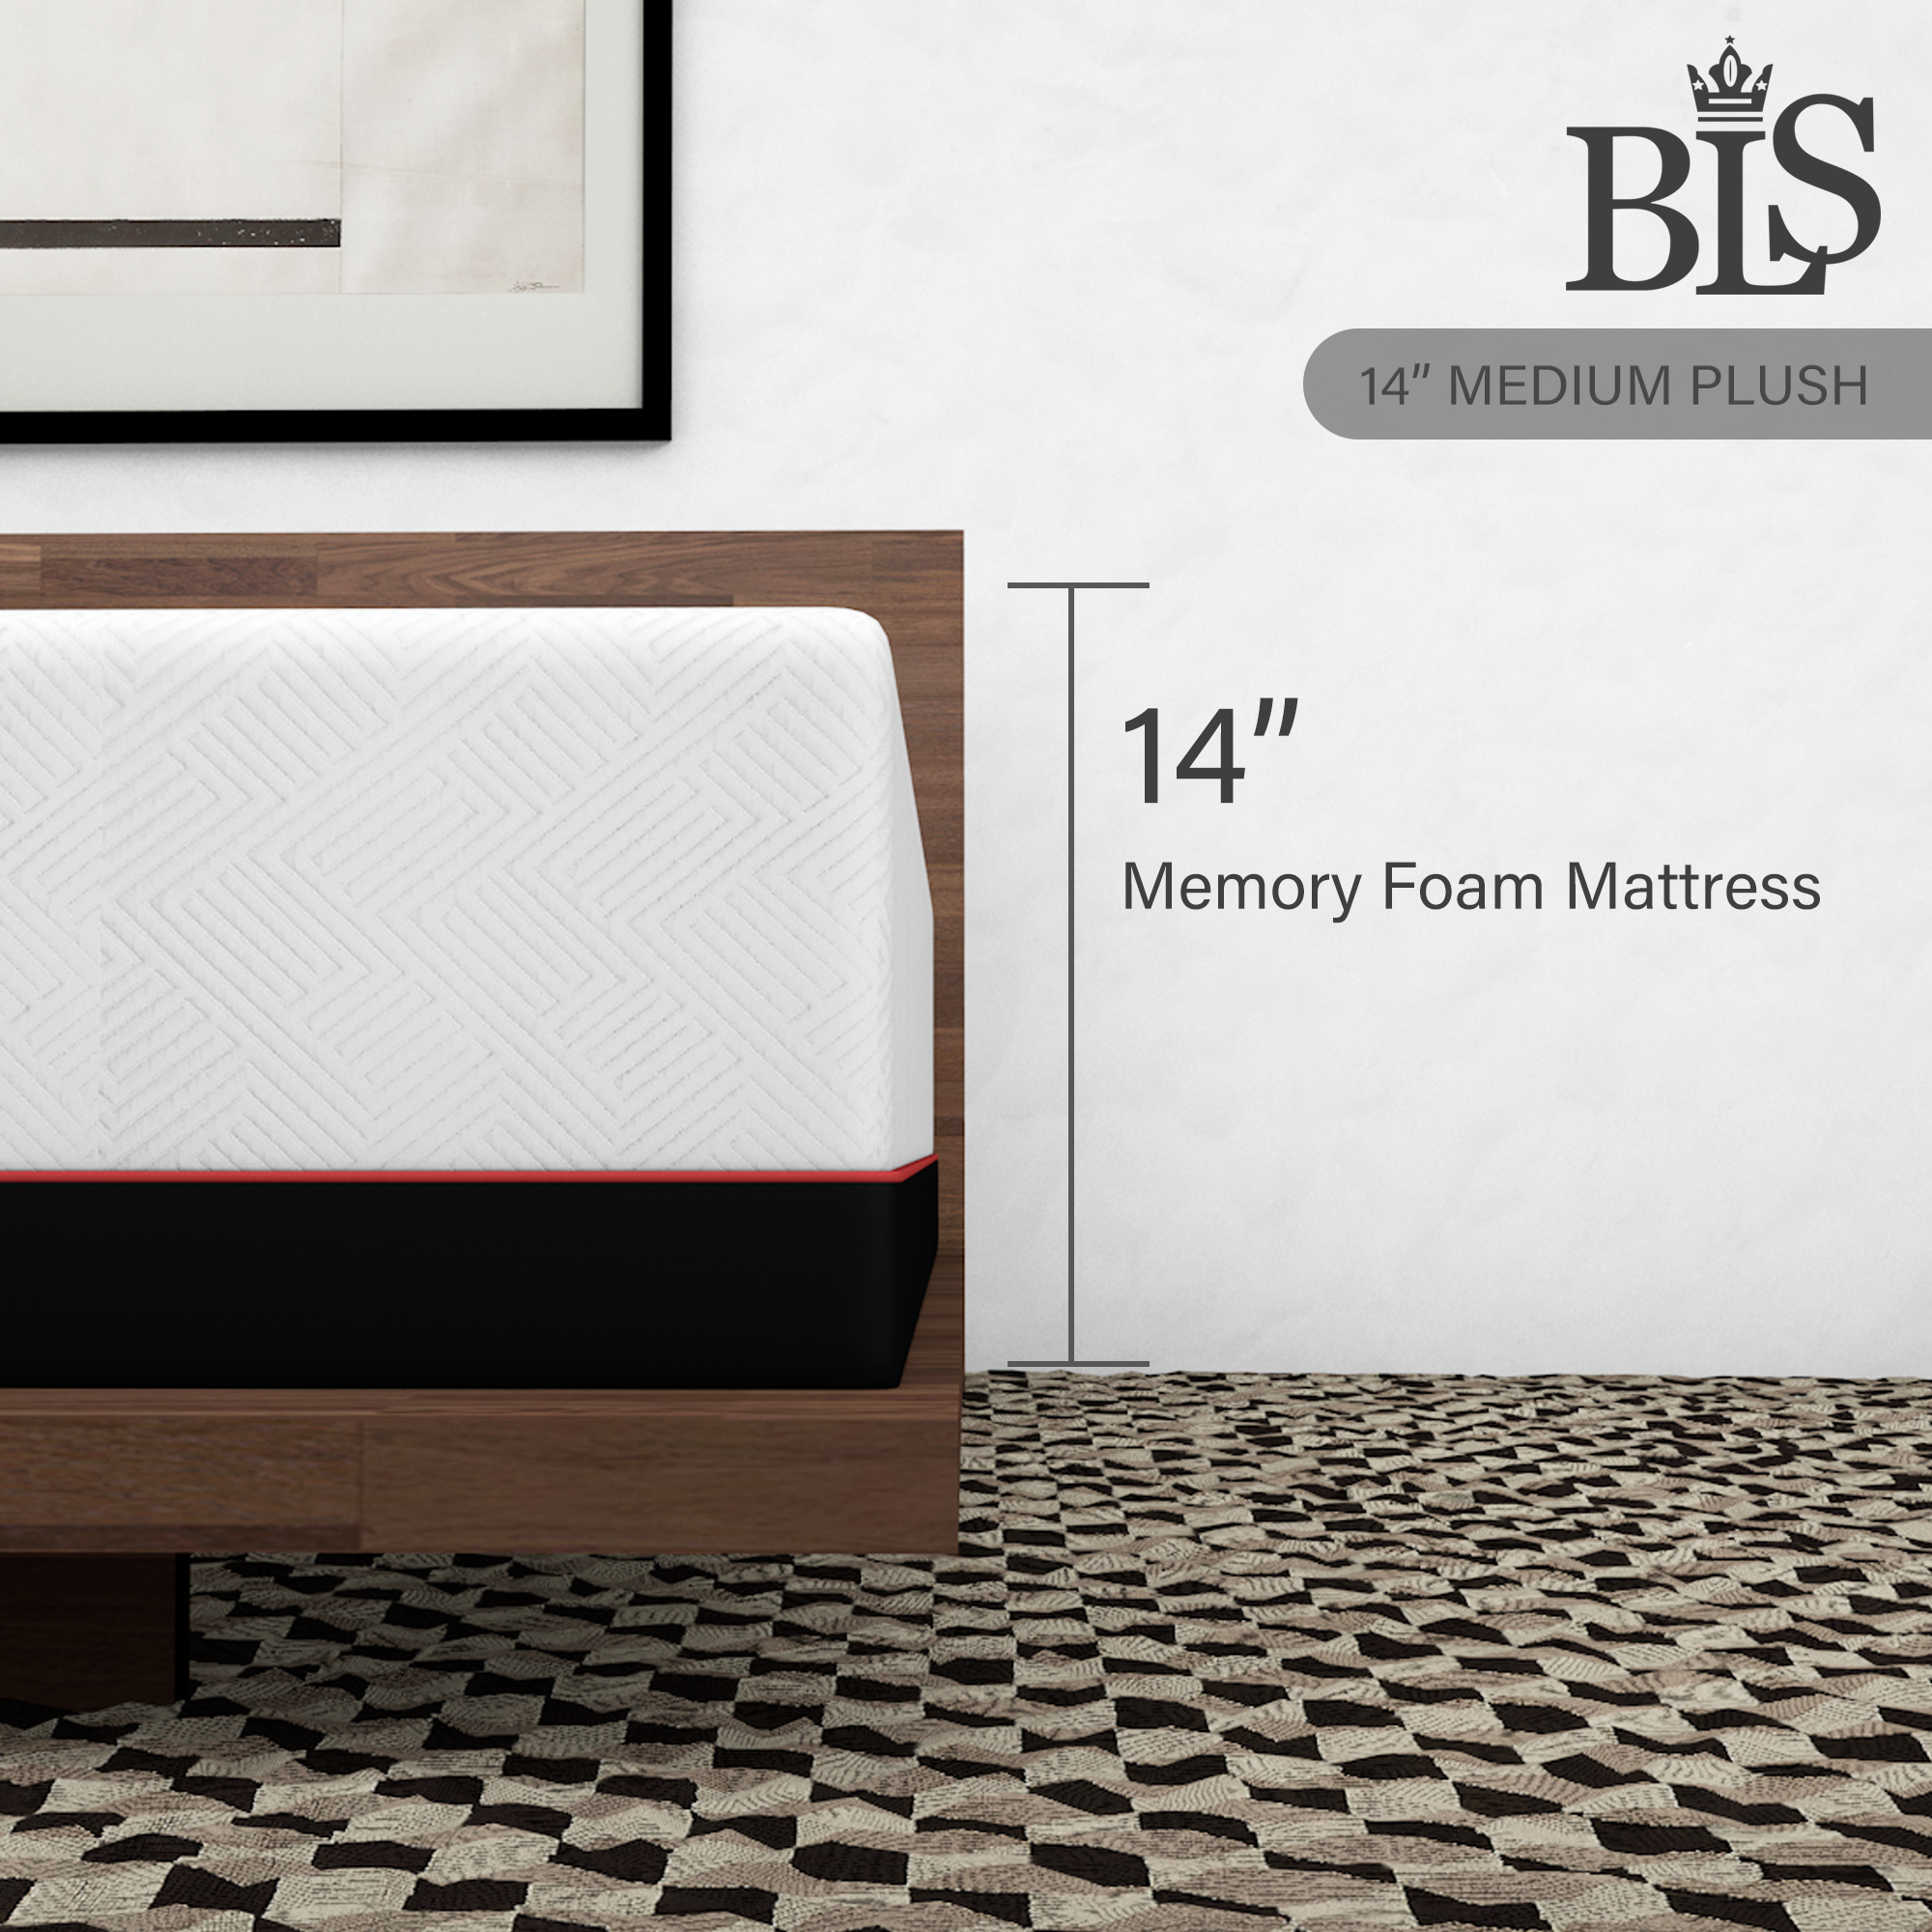 BLS 14 Inches Medium Plush Gel Memory Foam Mattress